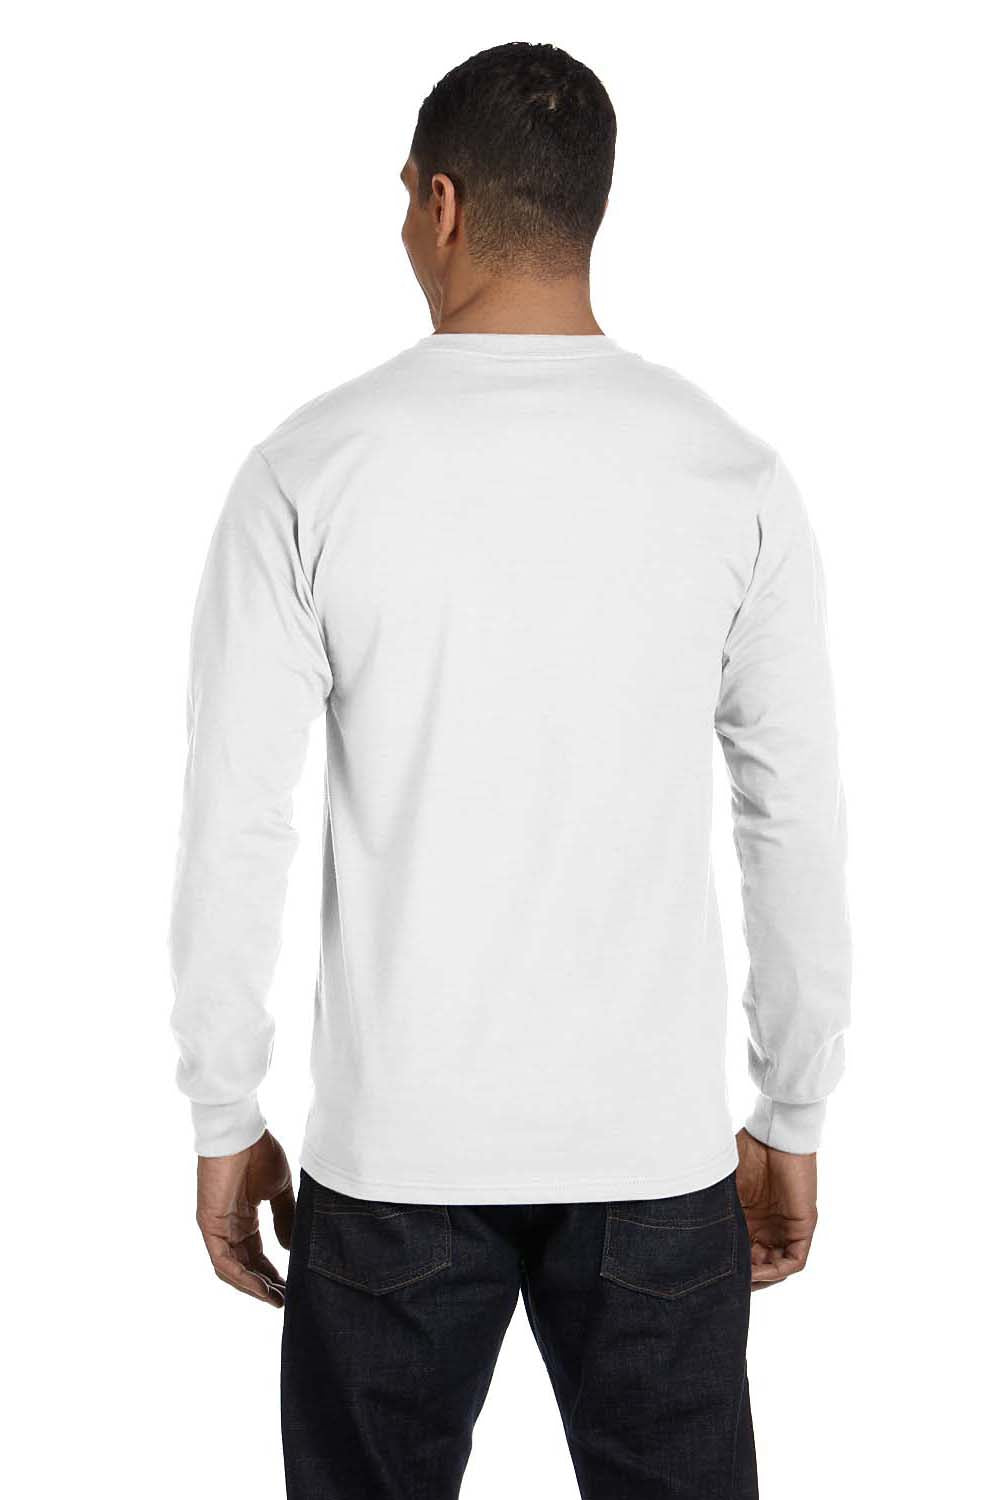 Hanes 5286 Mens ComfortSoft Long Sleeve Crewneck T-Shirt White Back